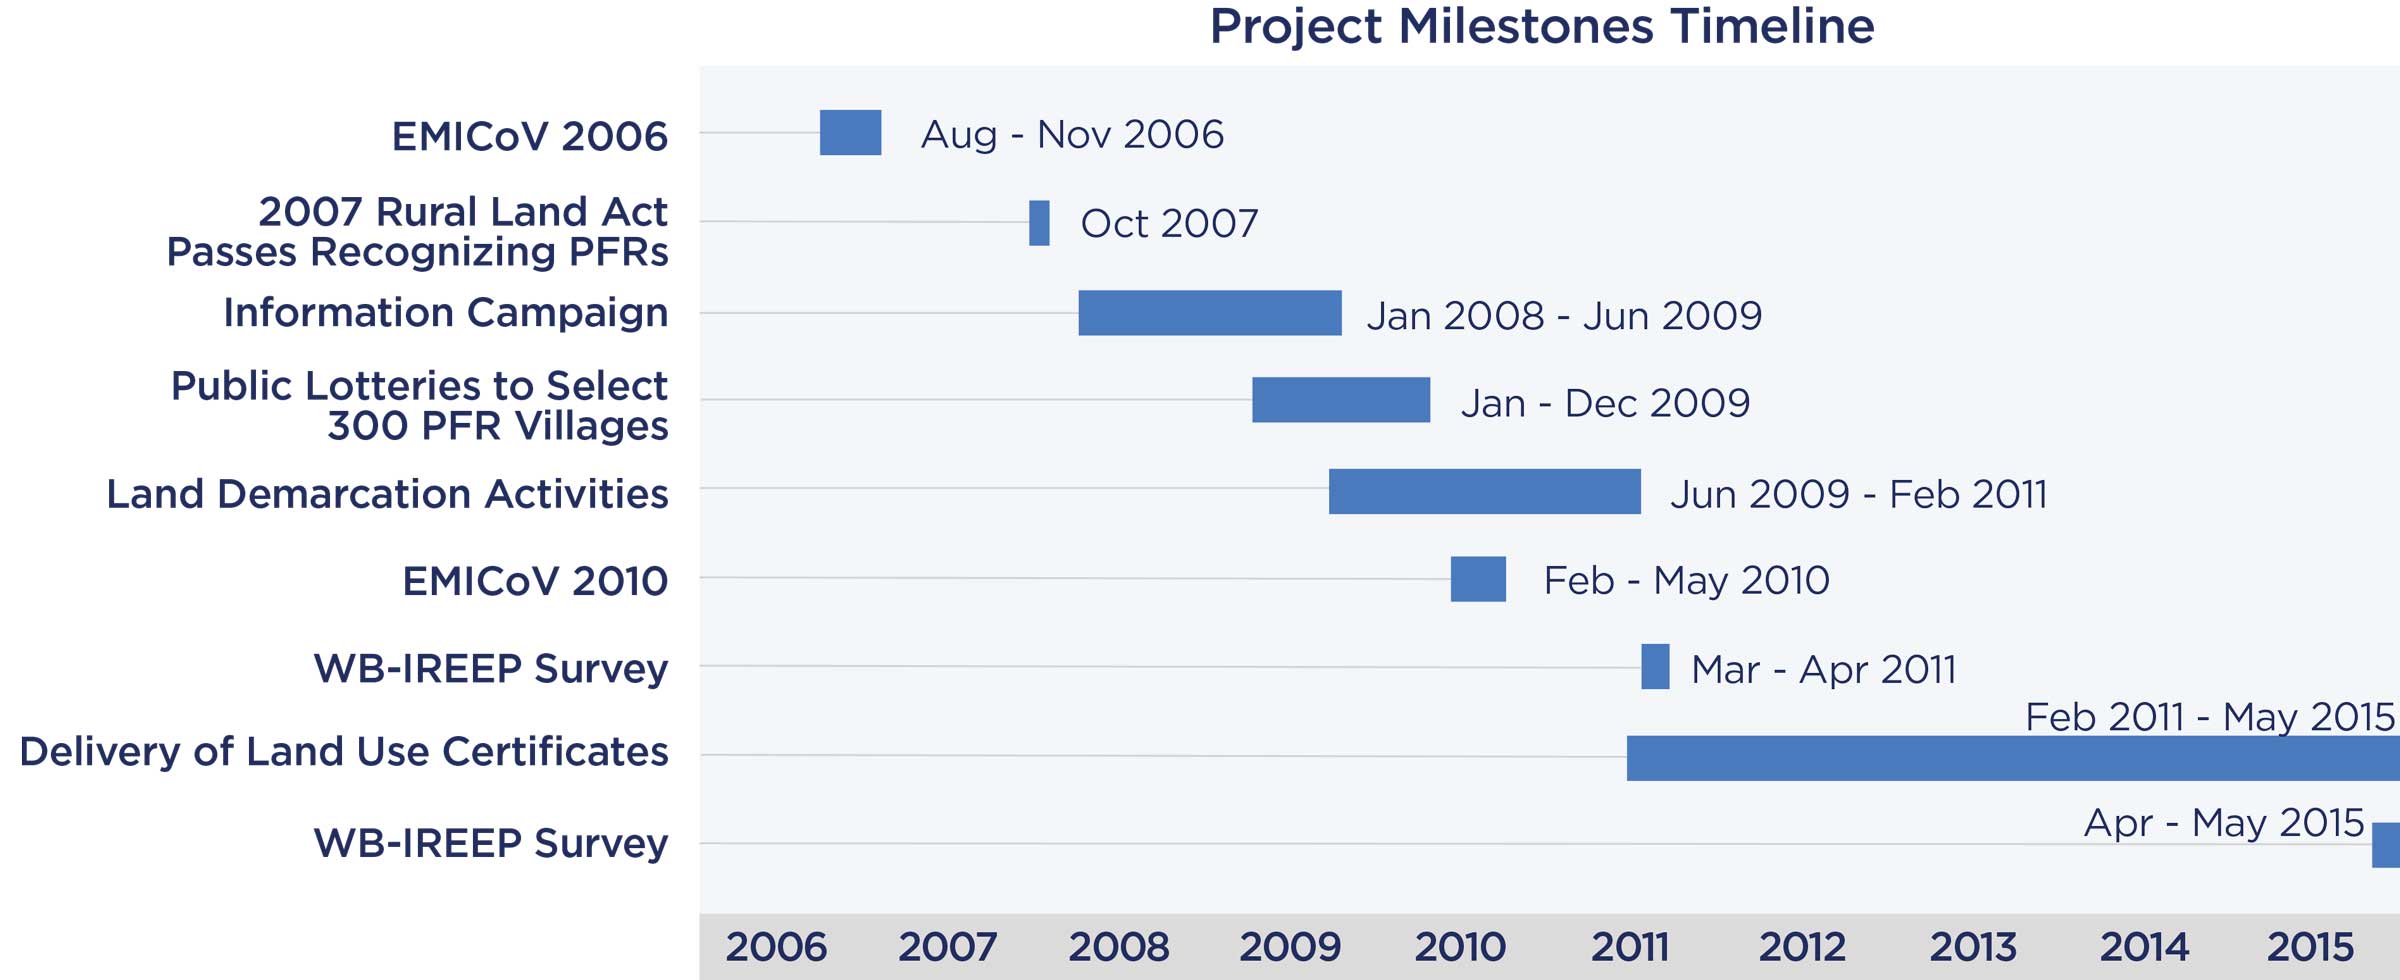 Project Milestones Timeline